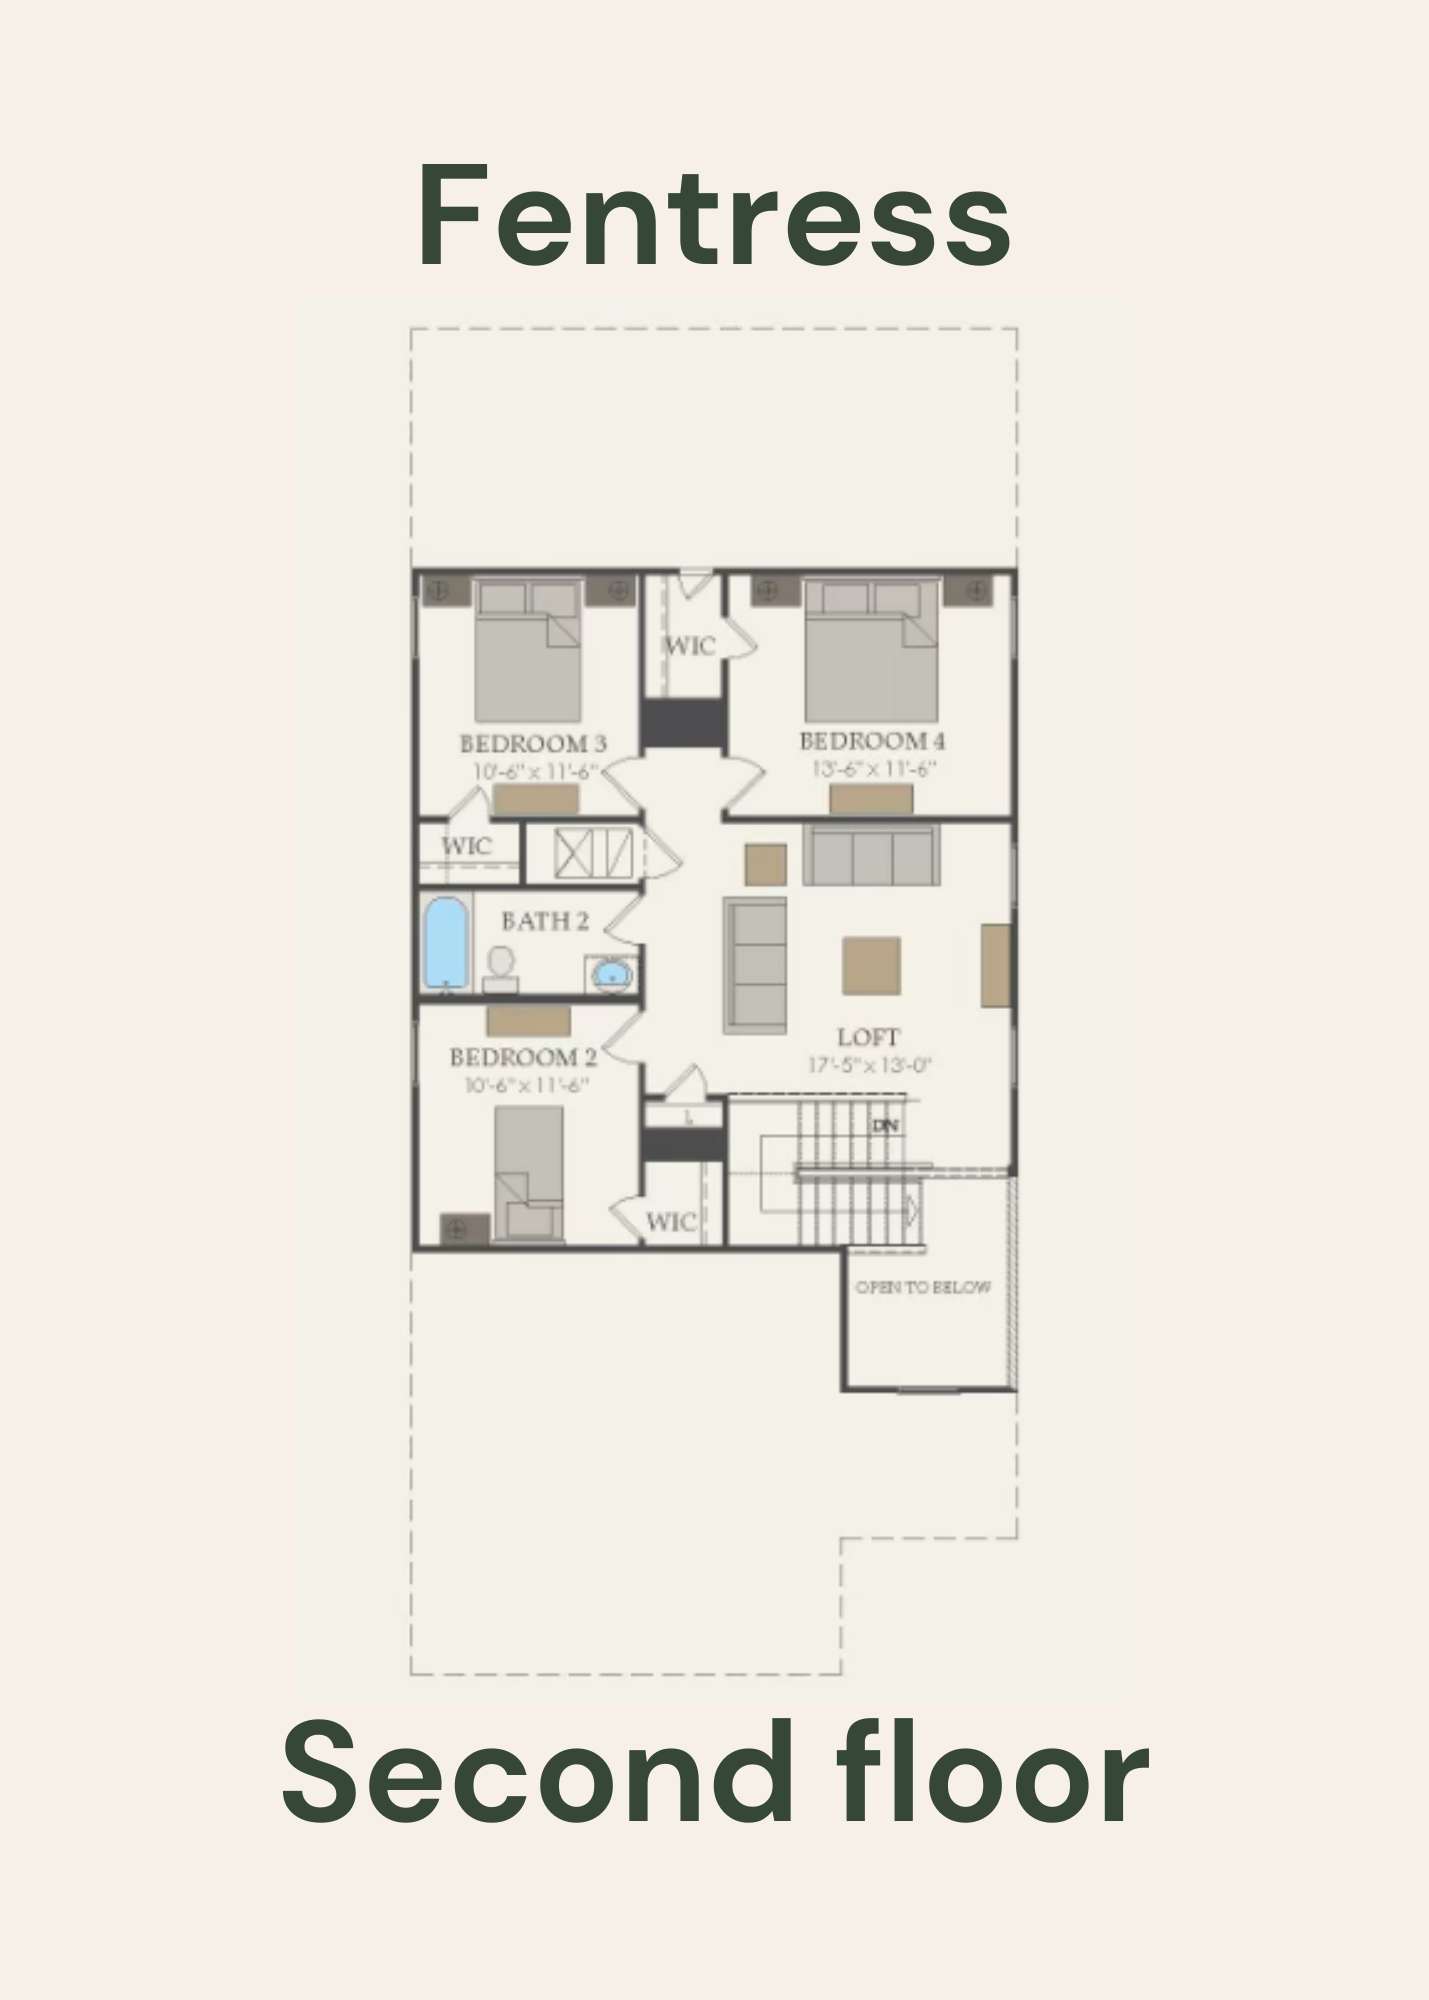 Fentress Second Floor - Floor Plan by Centex Homes